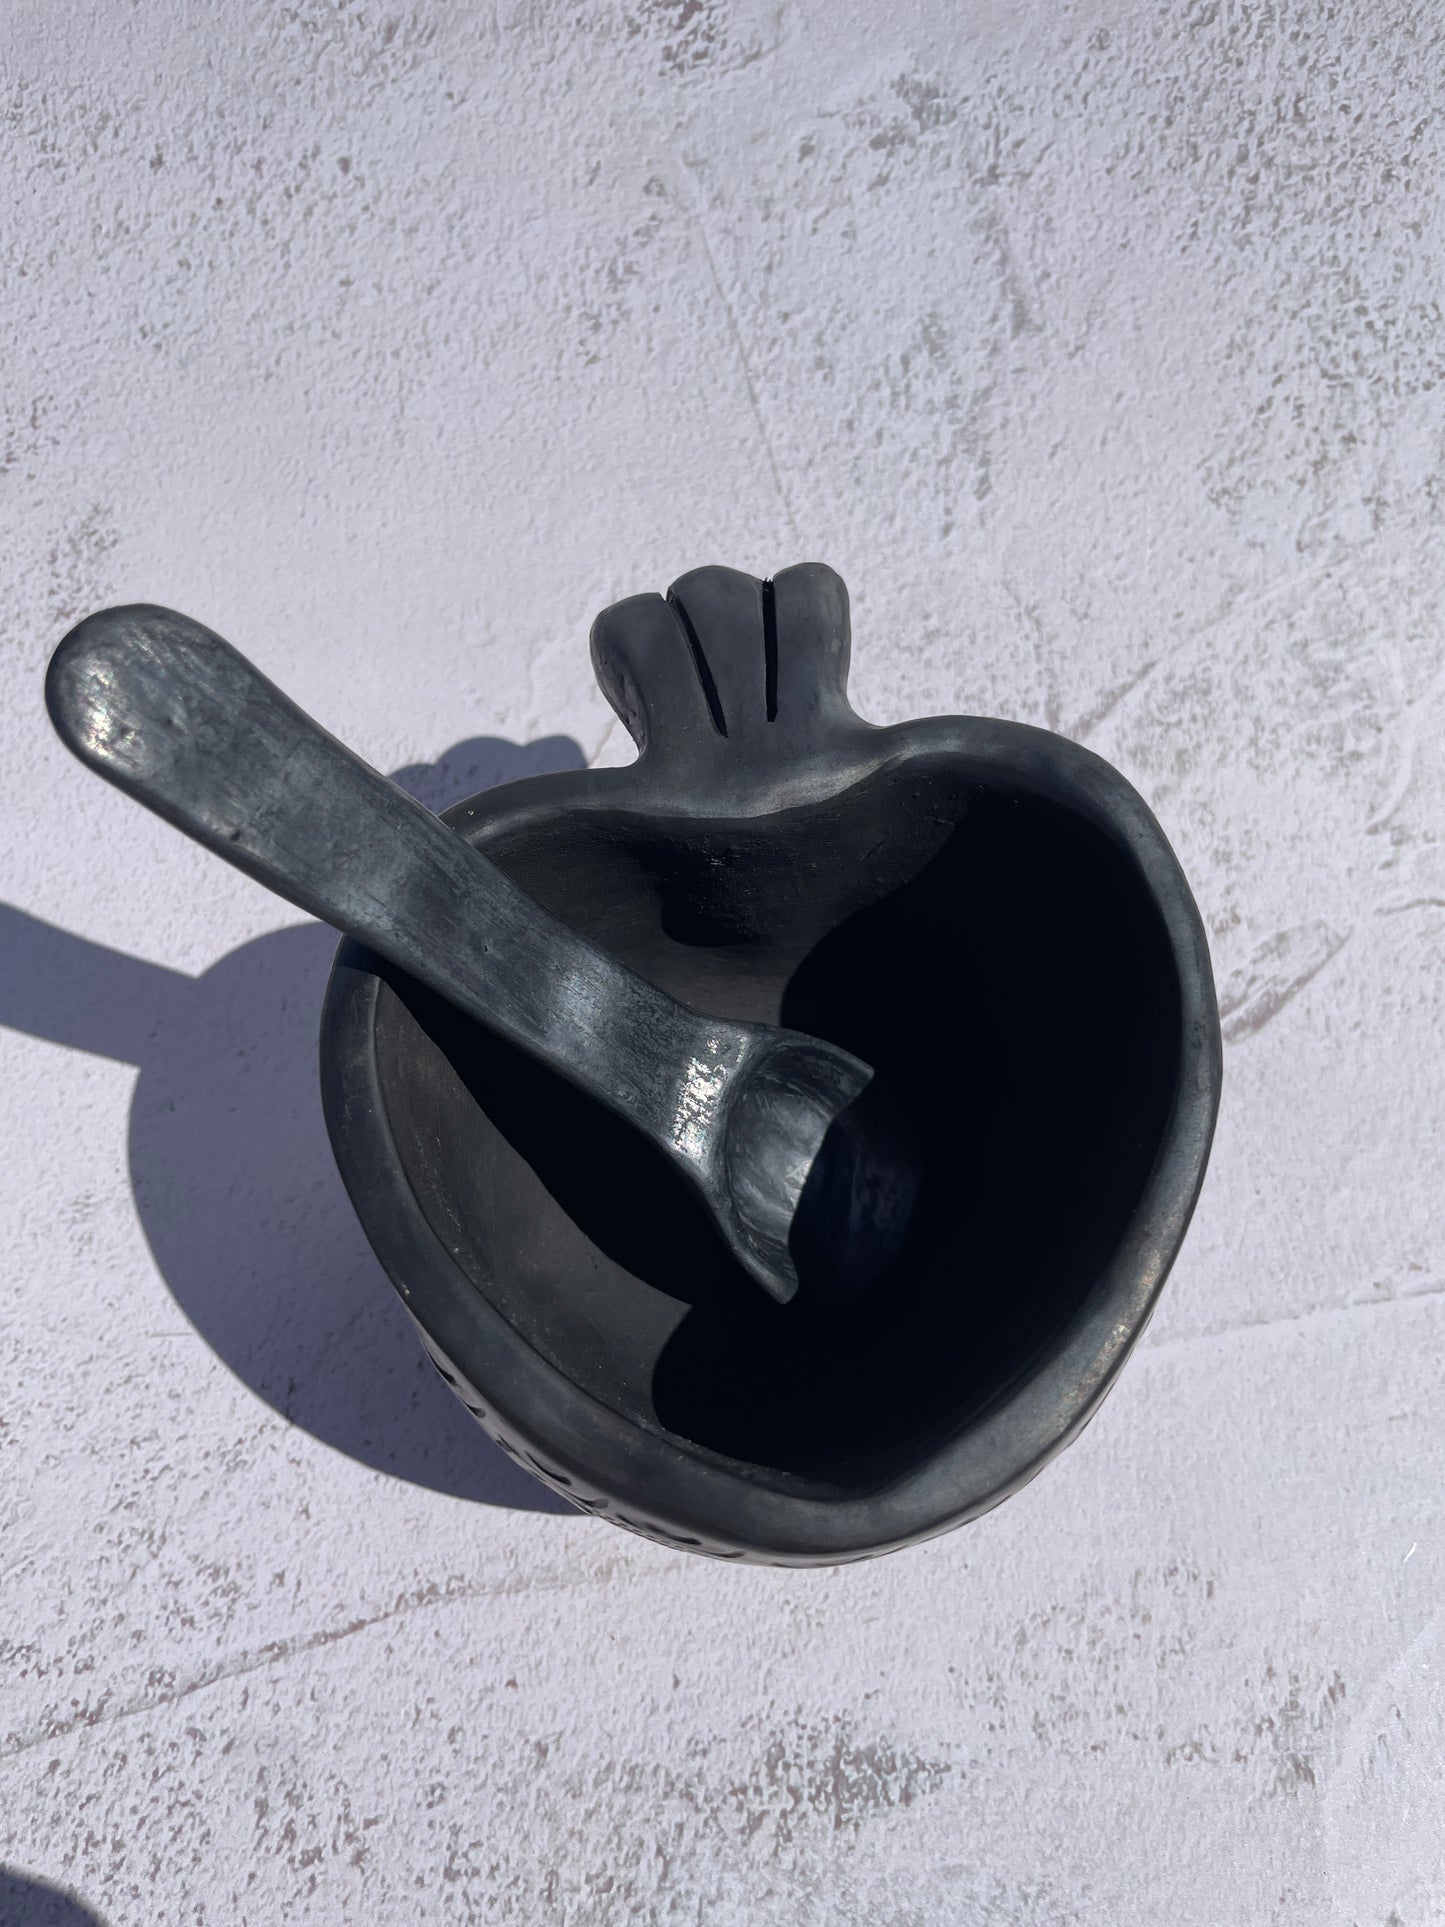 Oaxaca Black Pottery Heart Shaped Bowl with Spoon Tazón de Corazón